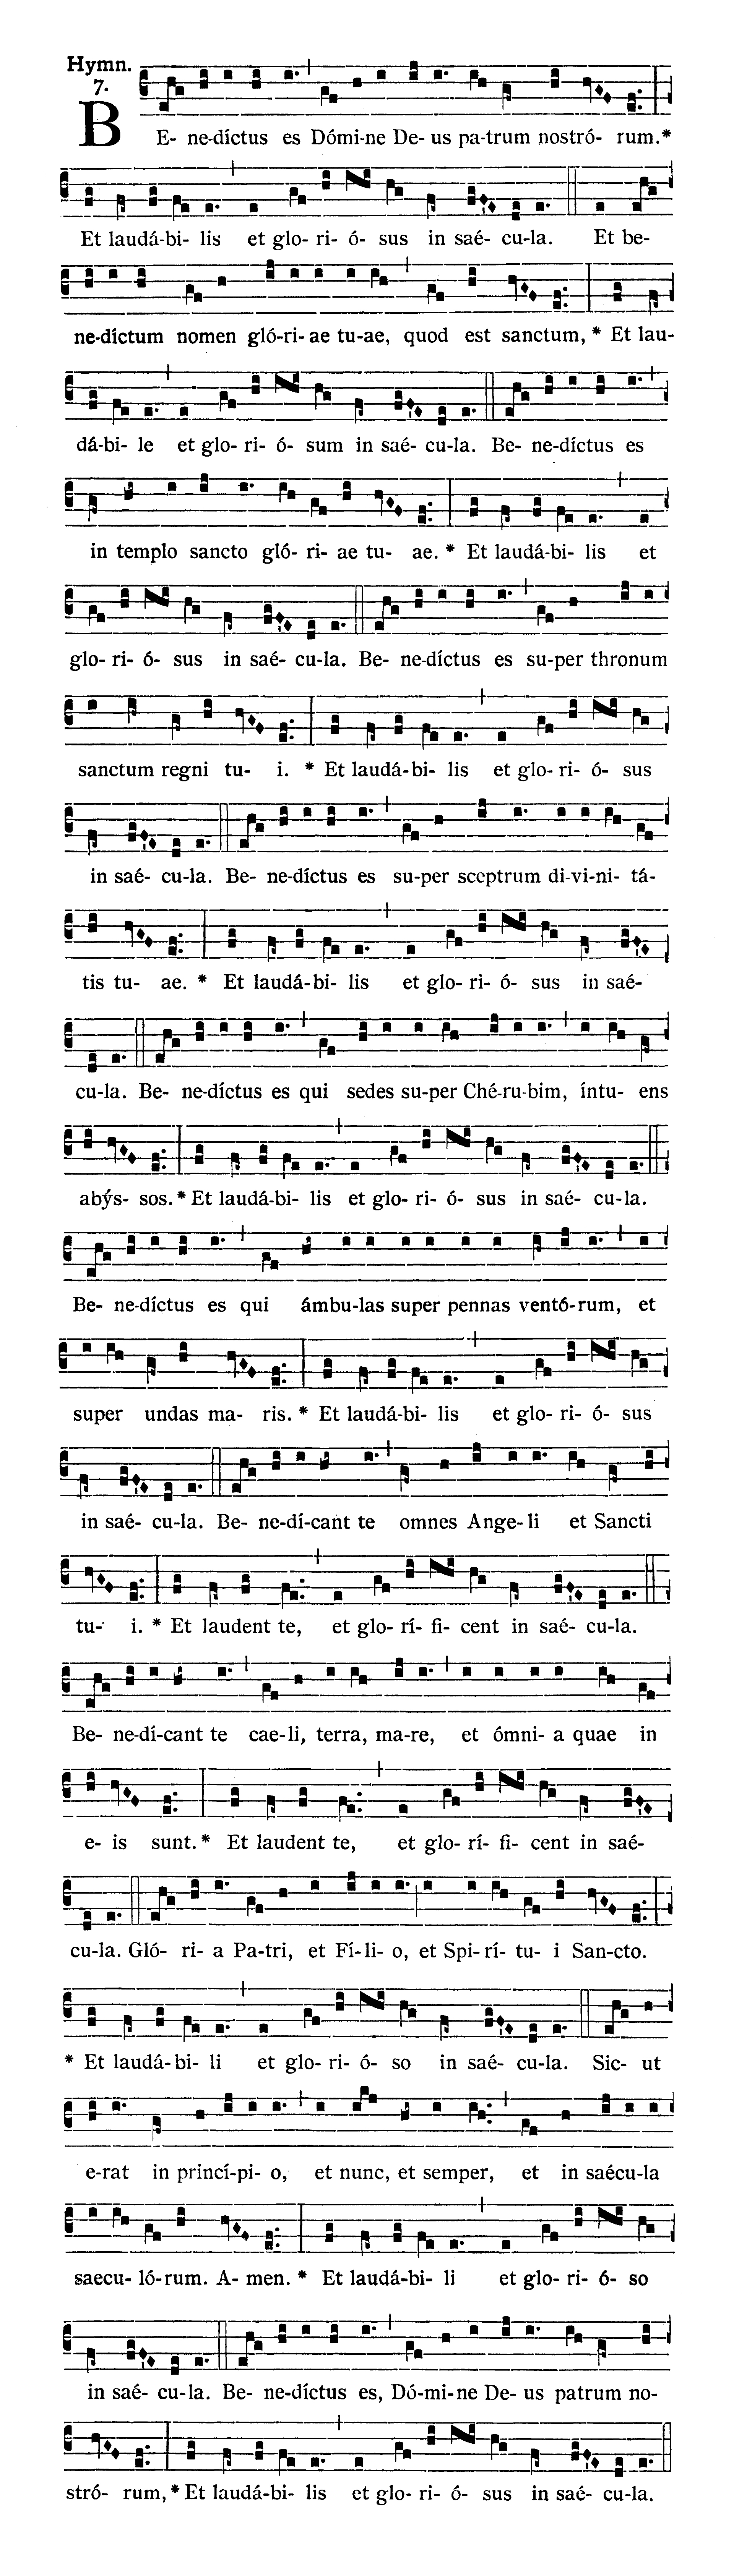 Sabbato Quatuor Temporum Septembris (Sobota suchych dni wrześniowych) - Hymnus (Benedictus es)